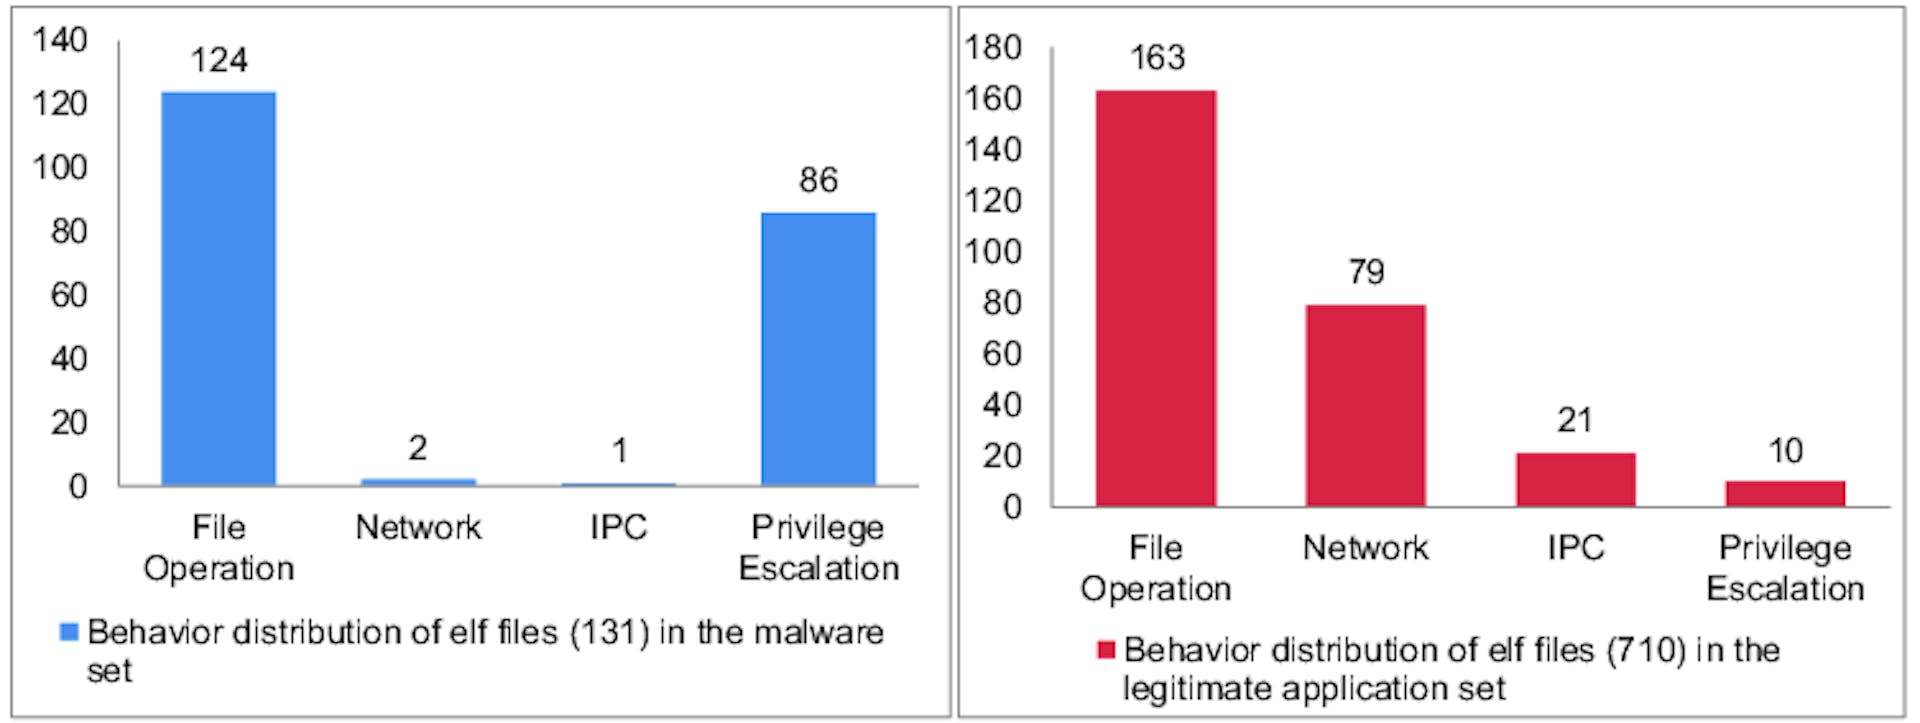 ResearchGate Behavior Distribution of ELF Files